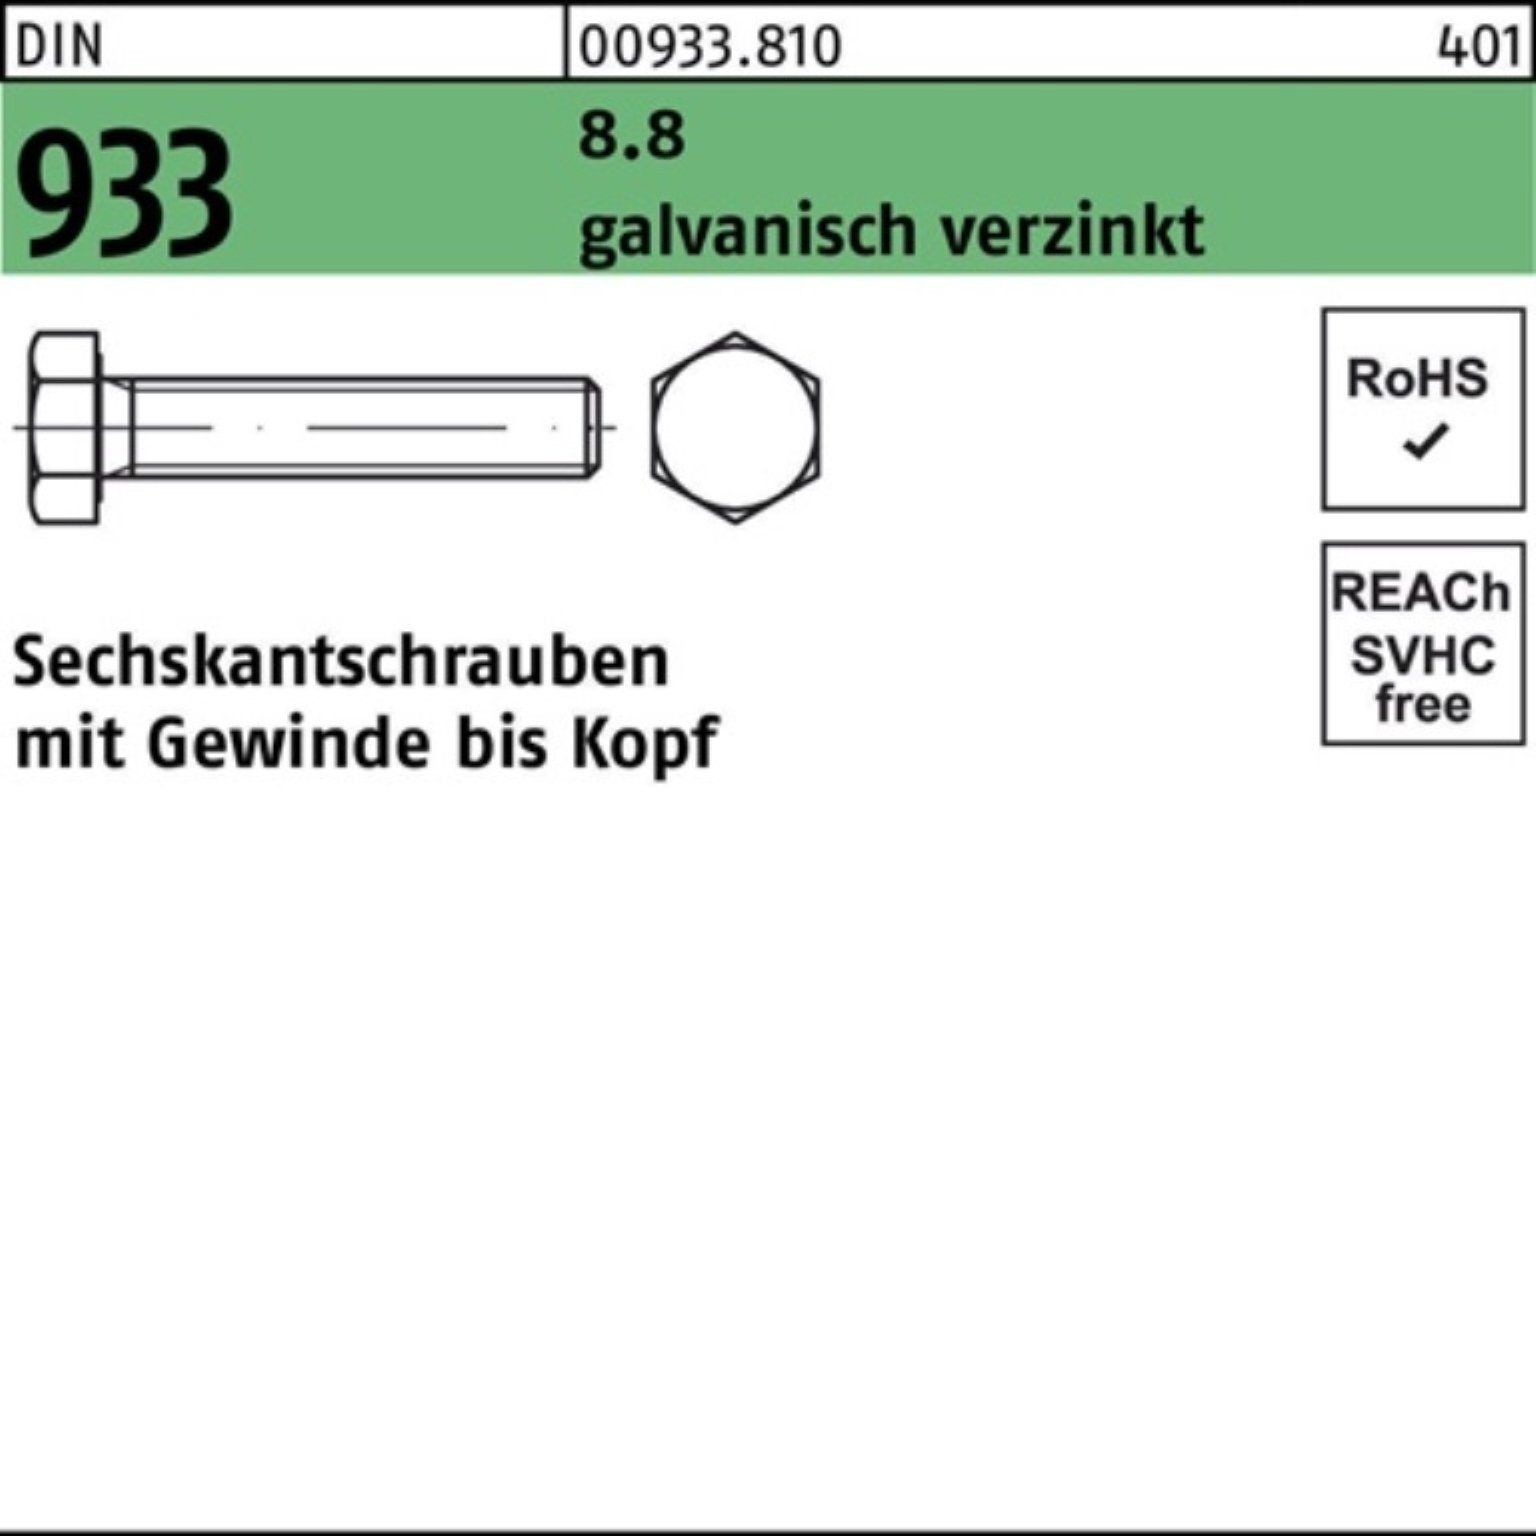 DIN 25 Stü VG Sechskantschraube Sechskantschraube M5x 100er Pack Reyher 933 8.8 galv.verz. 100